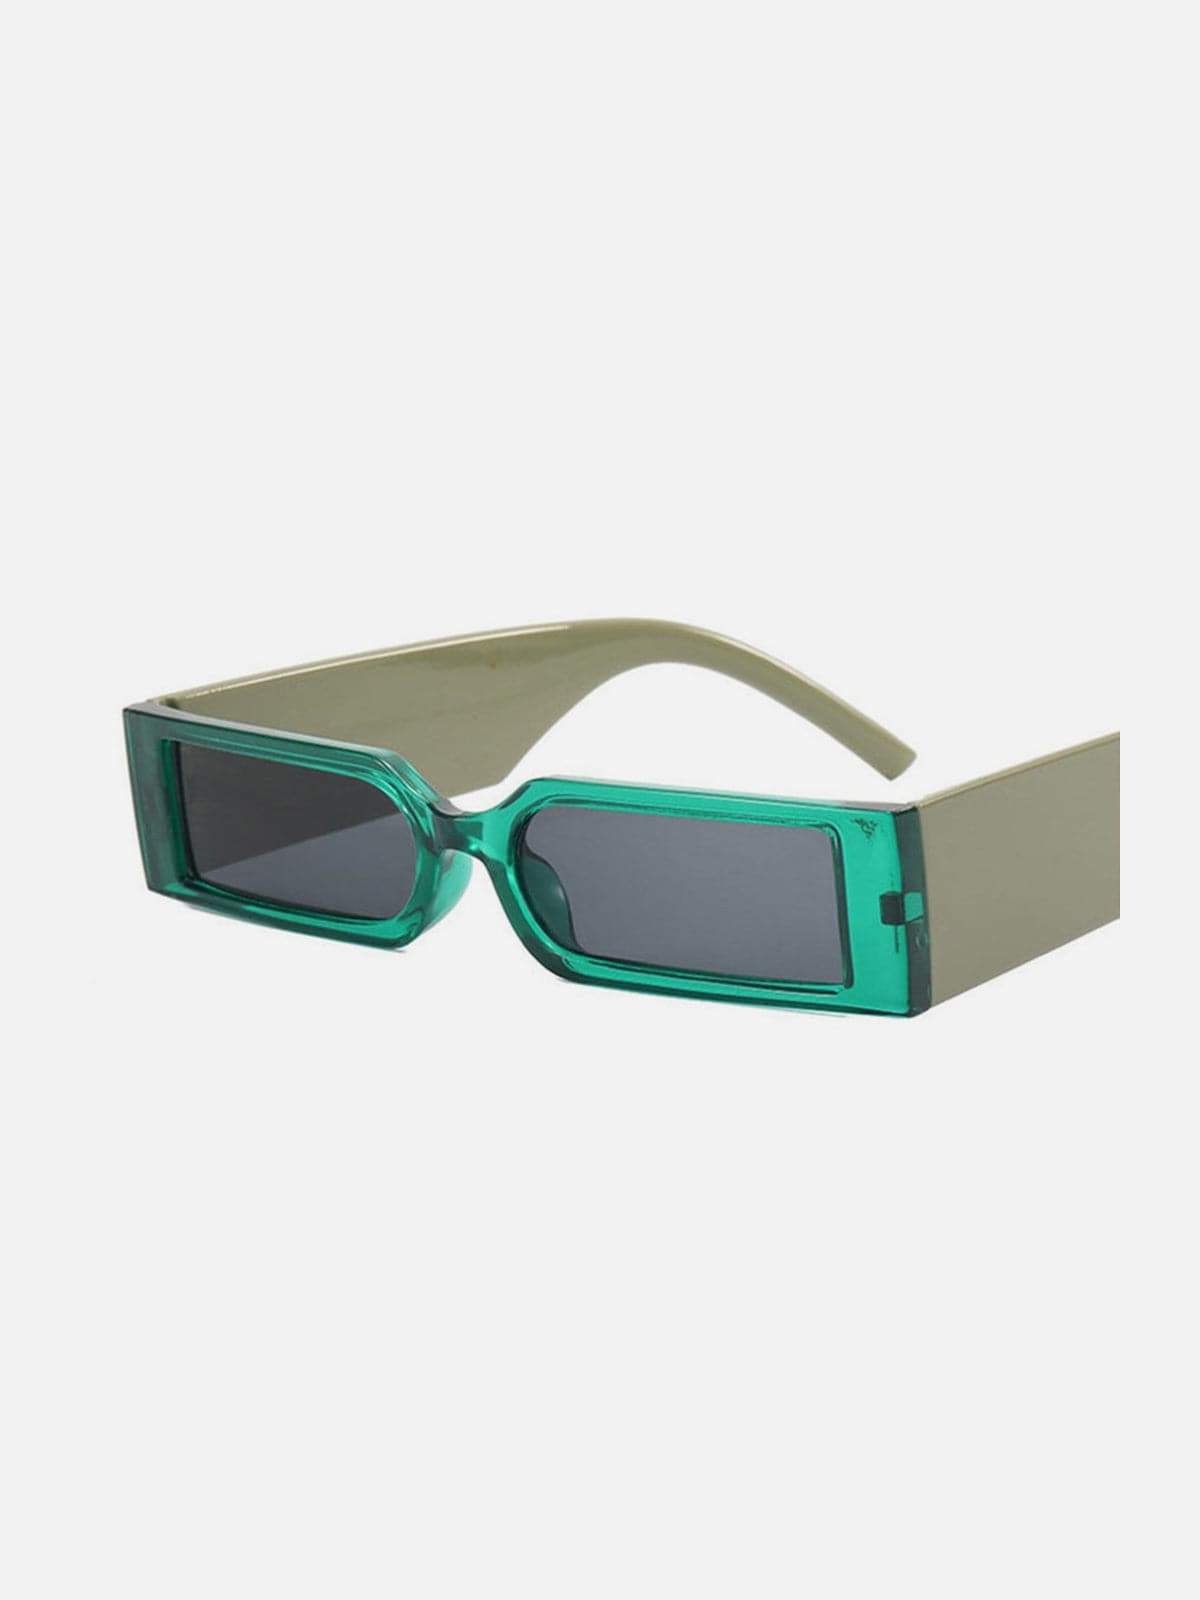 NEV Cyberpunk Narrow Square Glasses